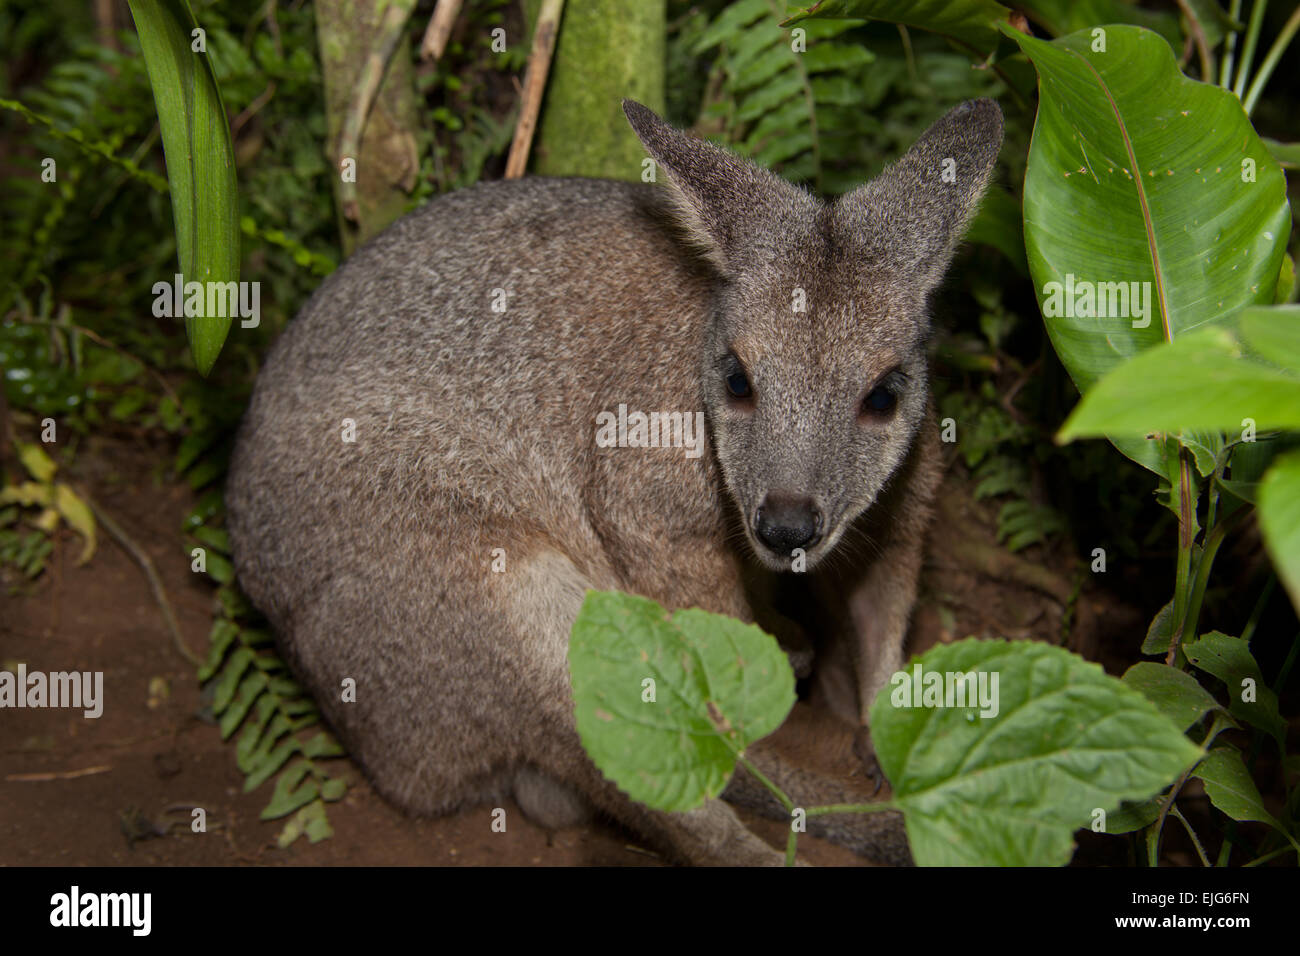 Tammar wallaby, Macropus eugenii, behind the green vegetation Stock Photo